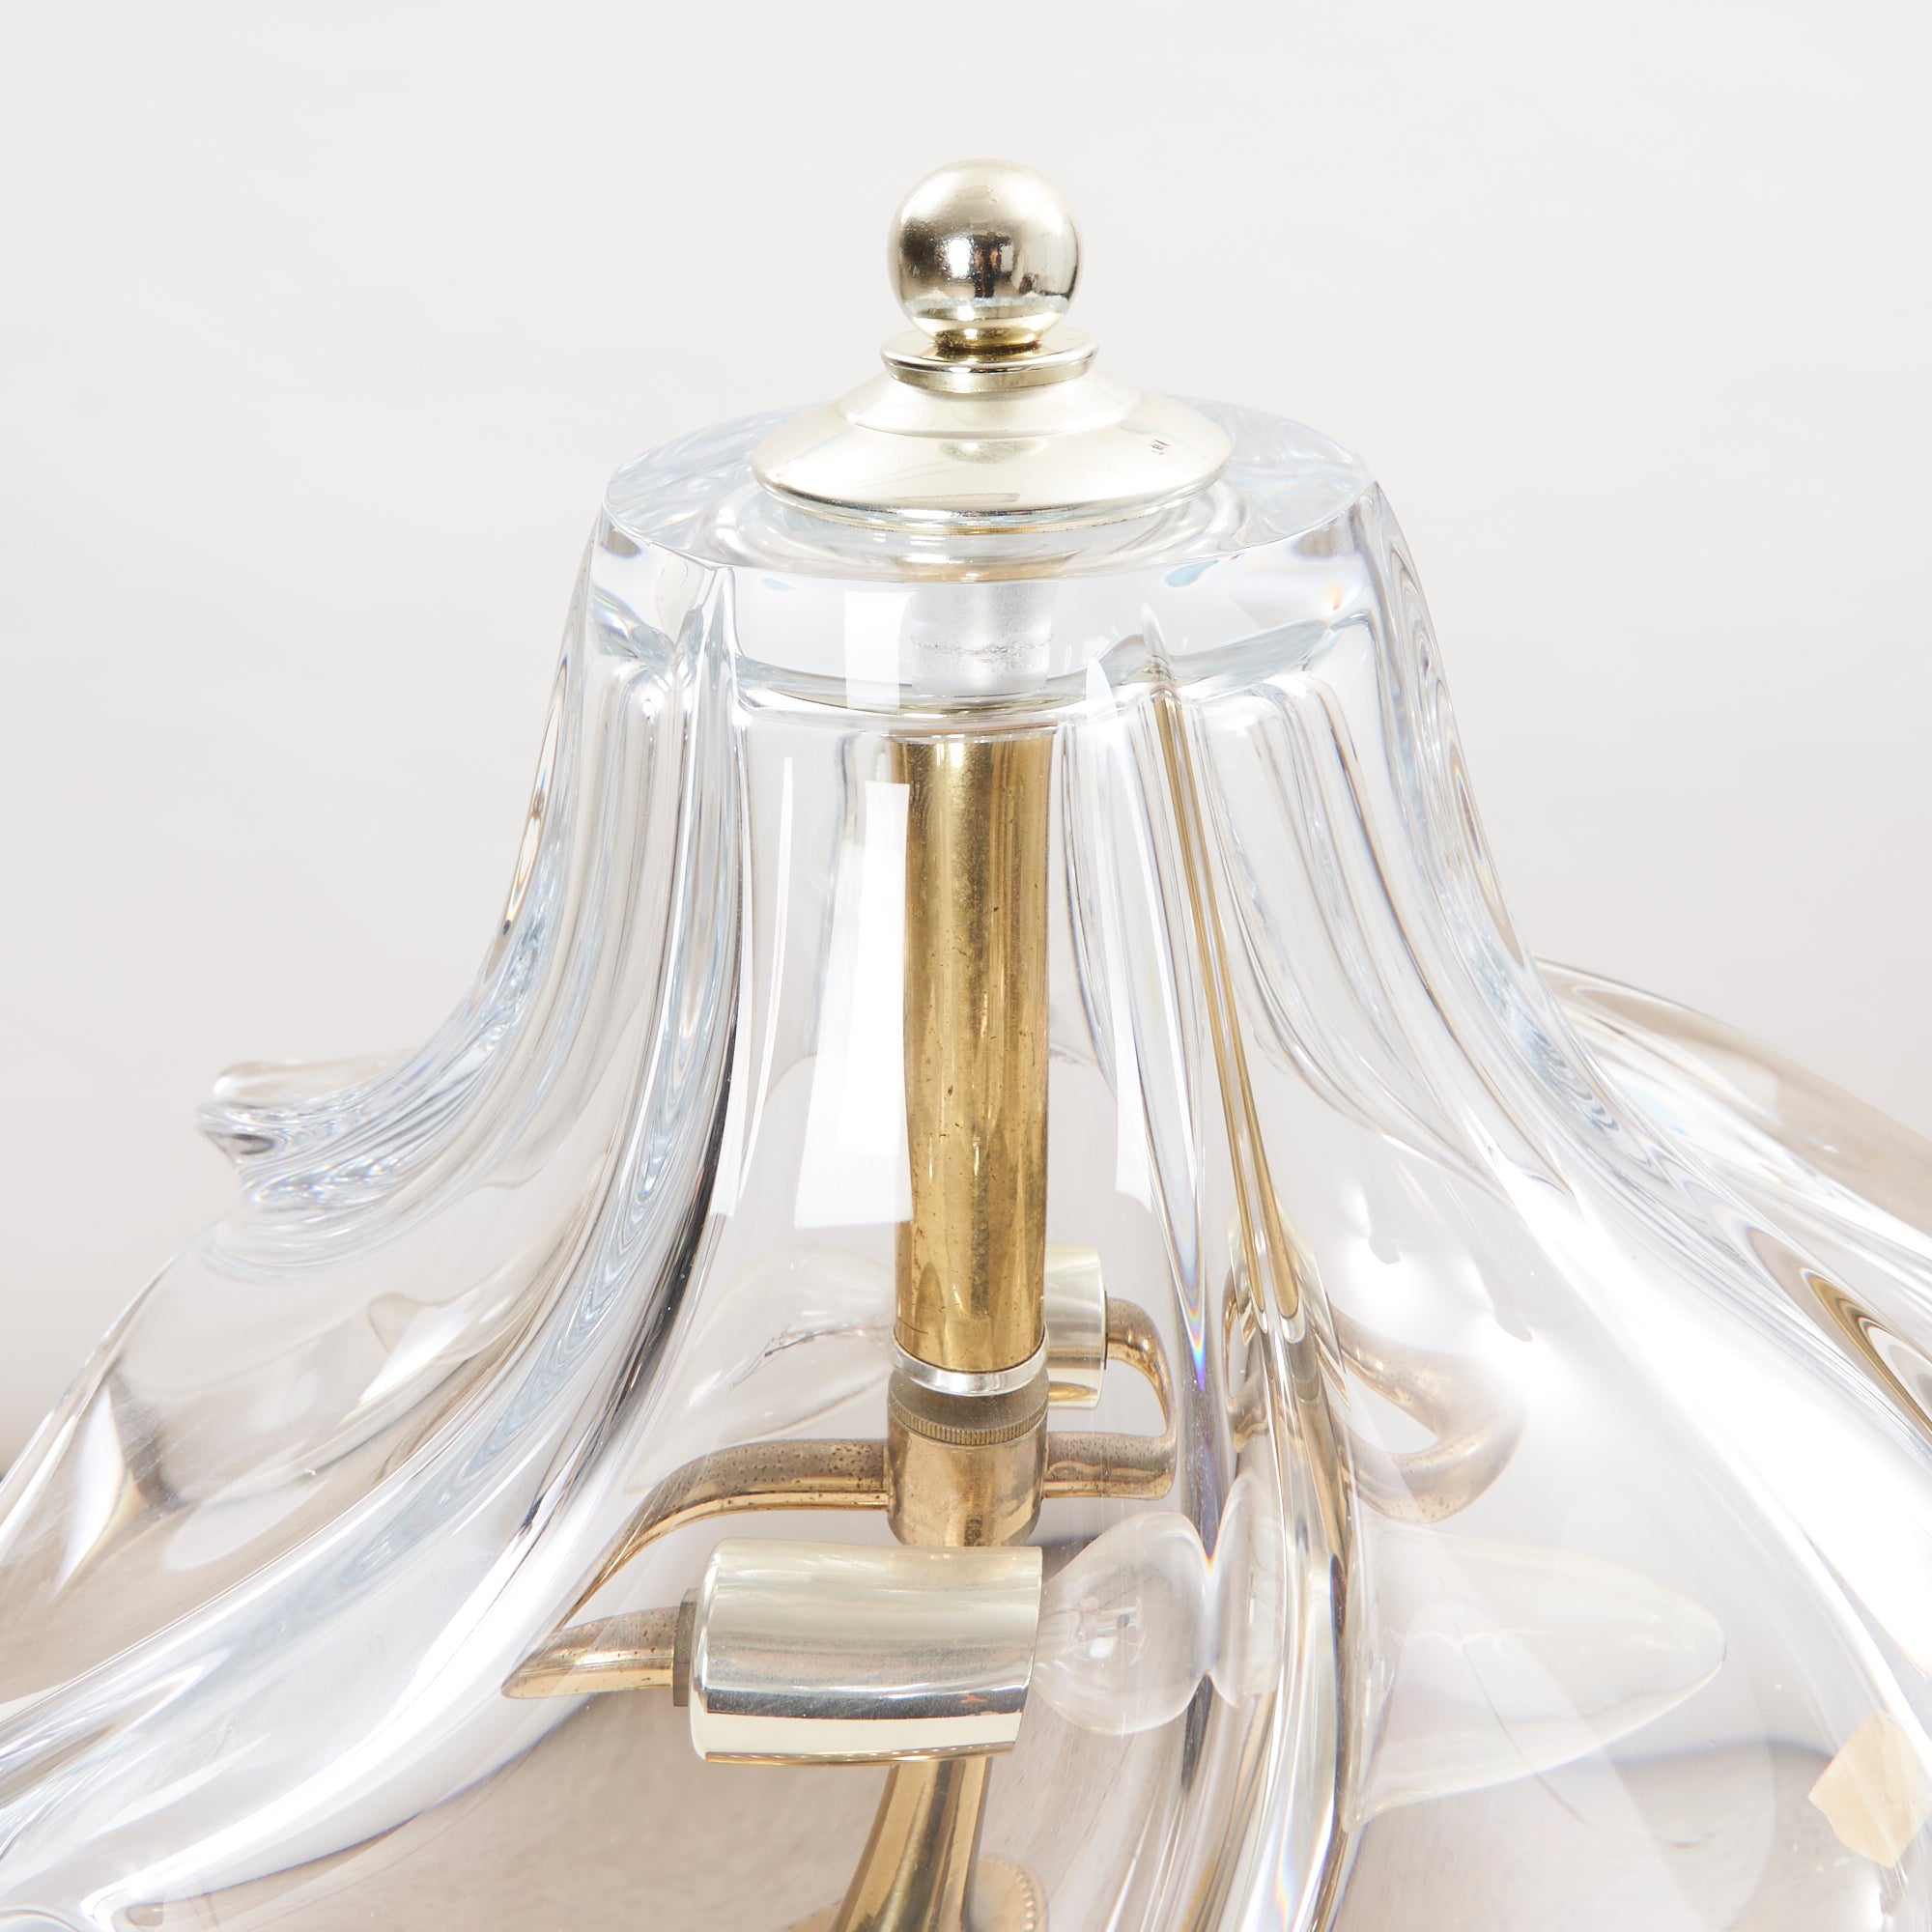 Confrac Art Verrier France Hand Blown Crystal Table Lamp